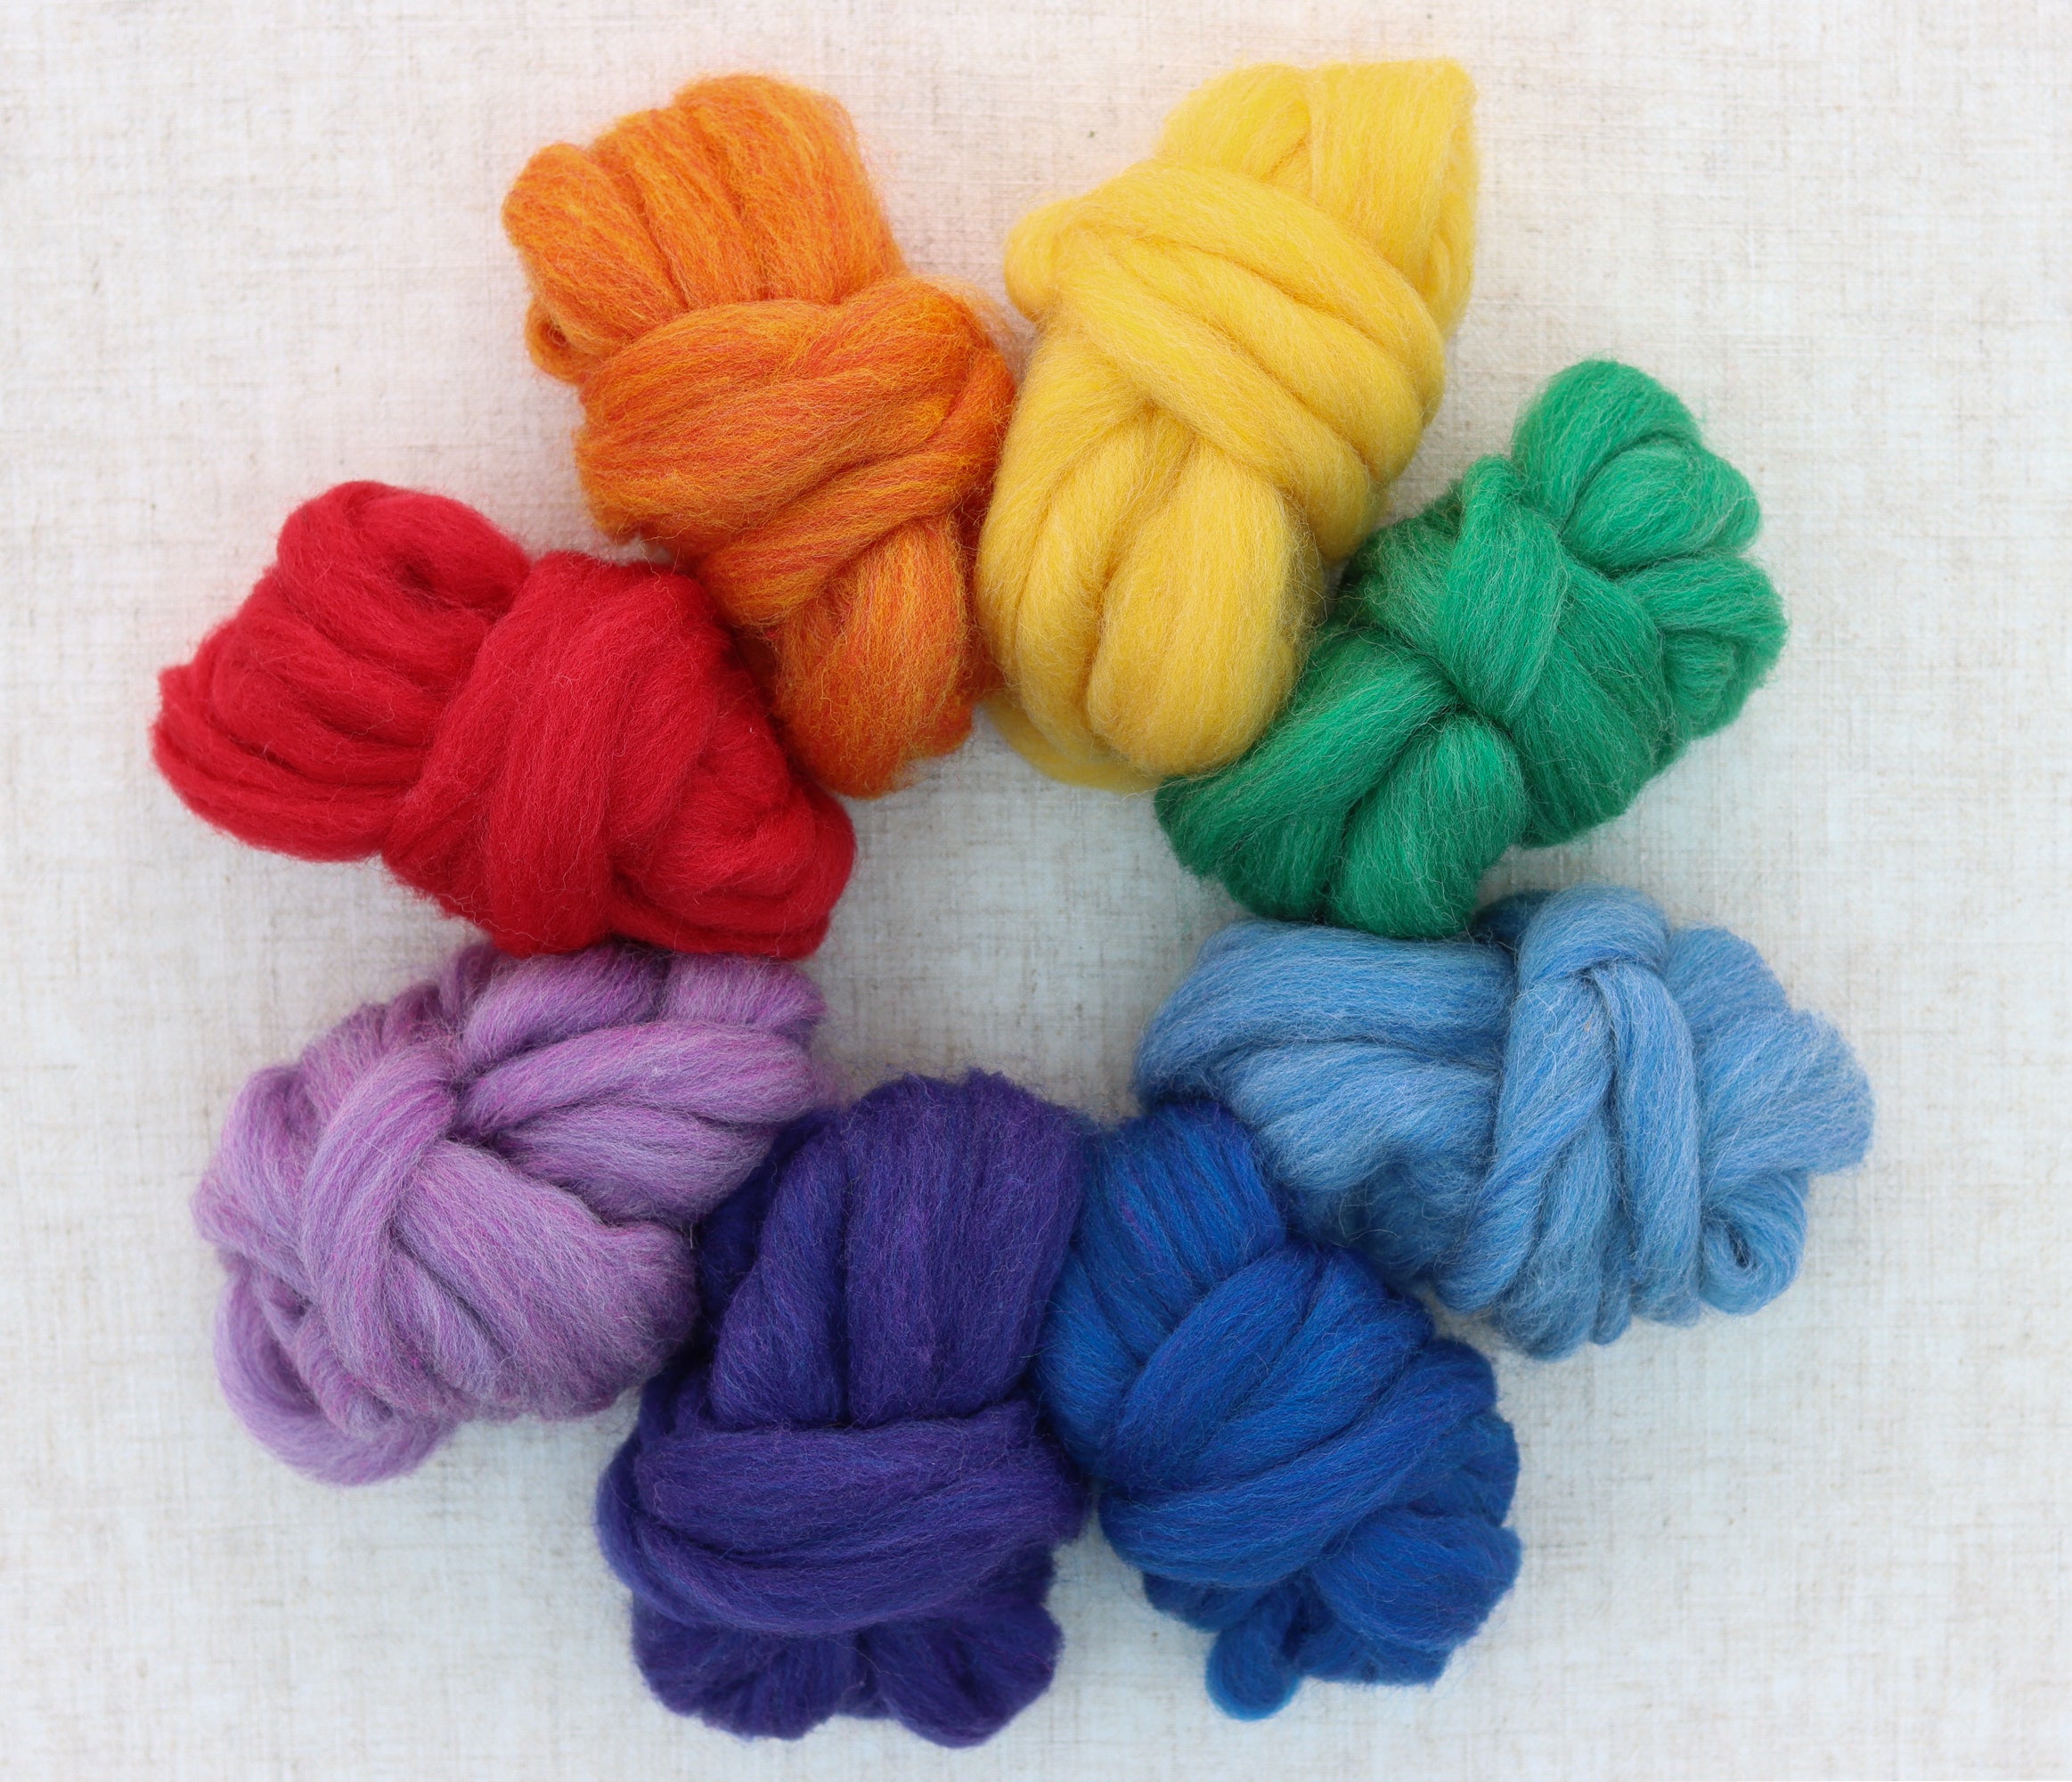 Ashford Corriedale Wool Roving Pack - Rainbow Brights - A Child's